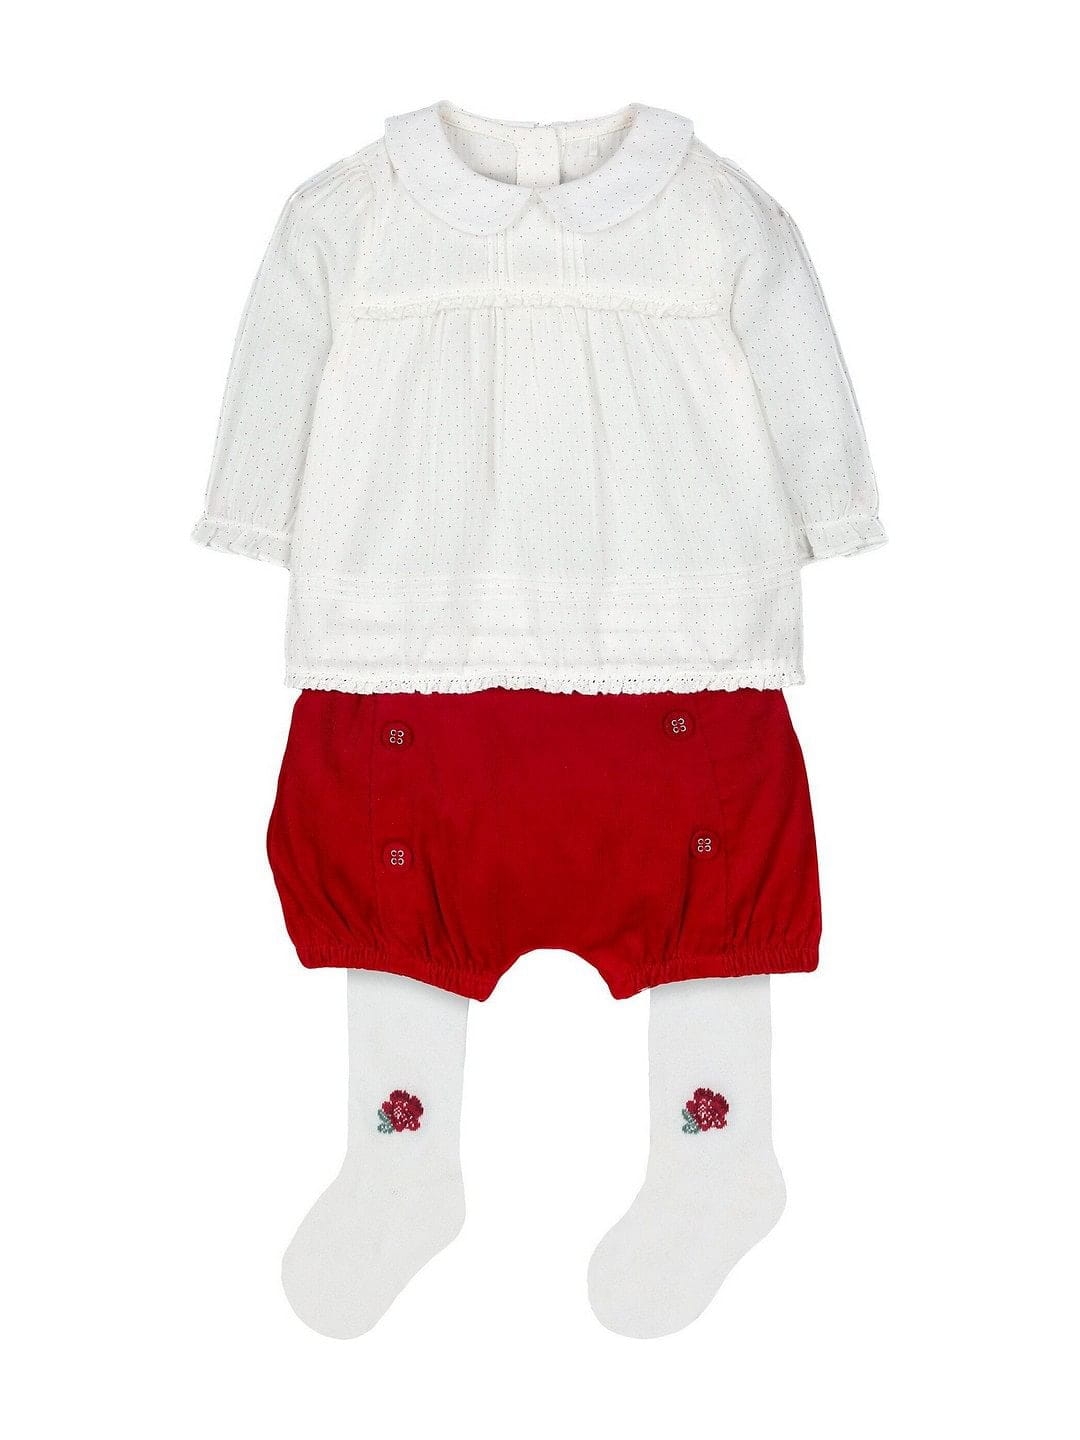 Mothercare | White Polka Dot Blouse, Red Shorts And Tights Set 0